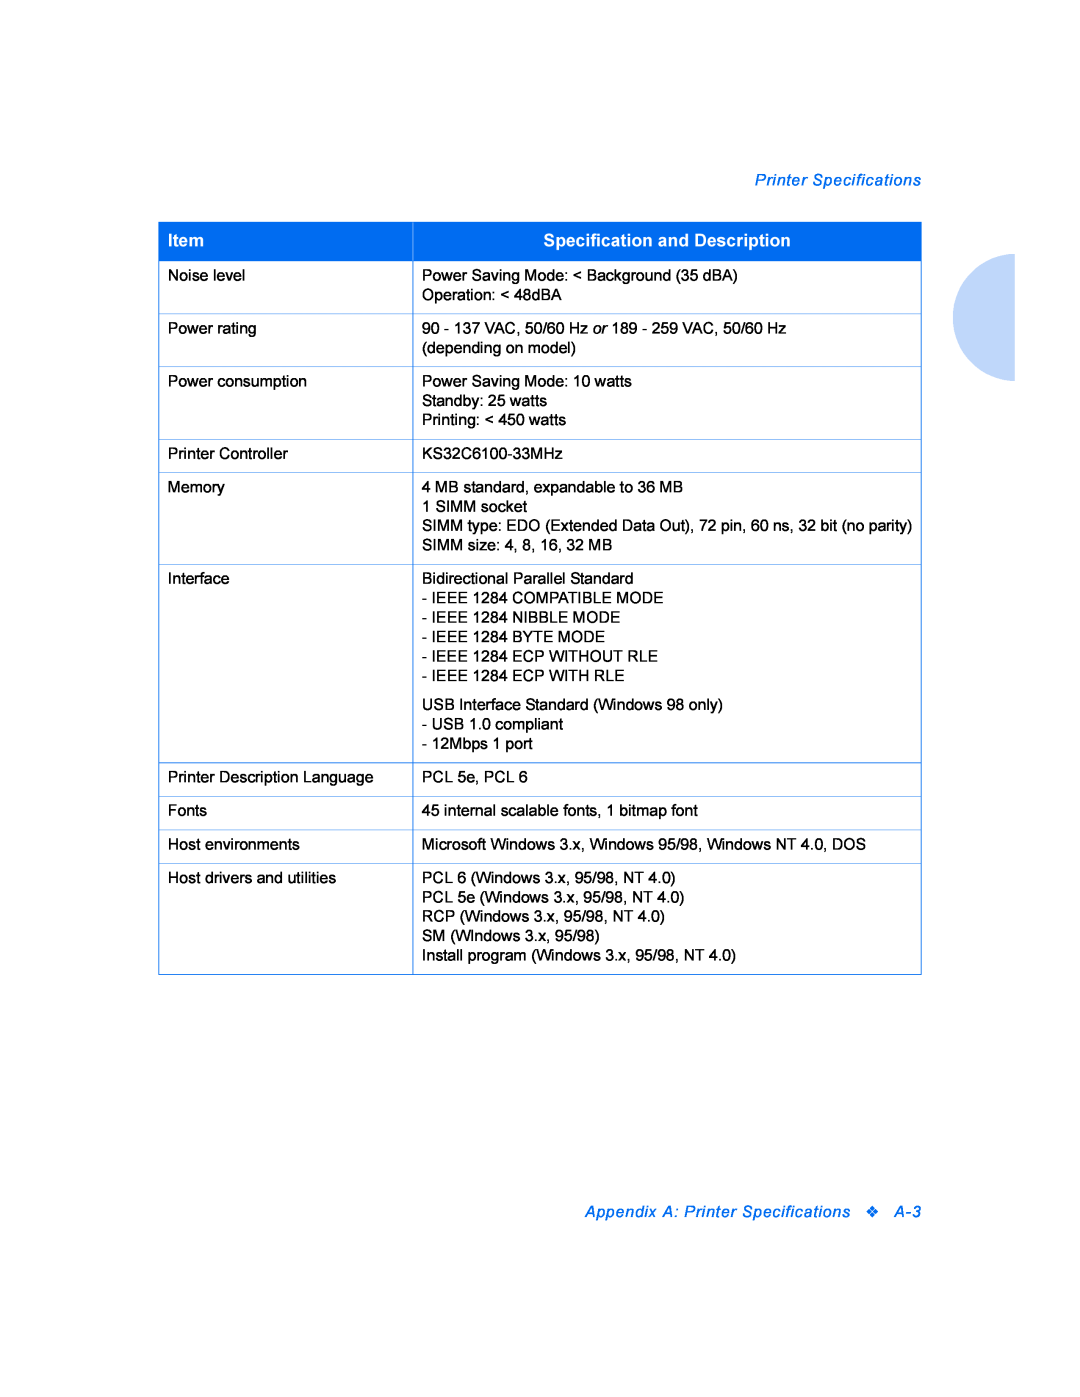 Xerox DocuPrint P8ex manual Item, Specification and Description, Appendix A: Printer Specifications 